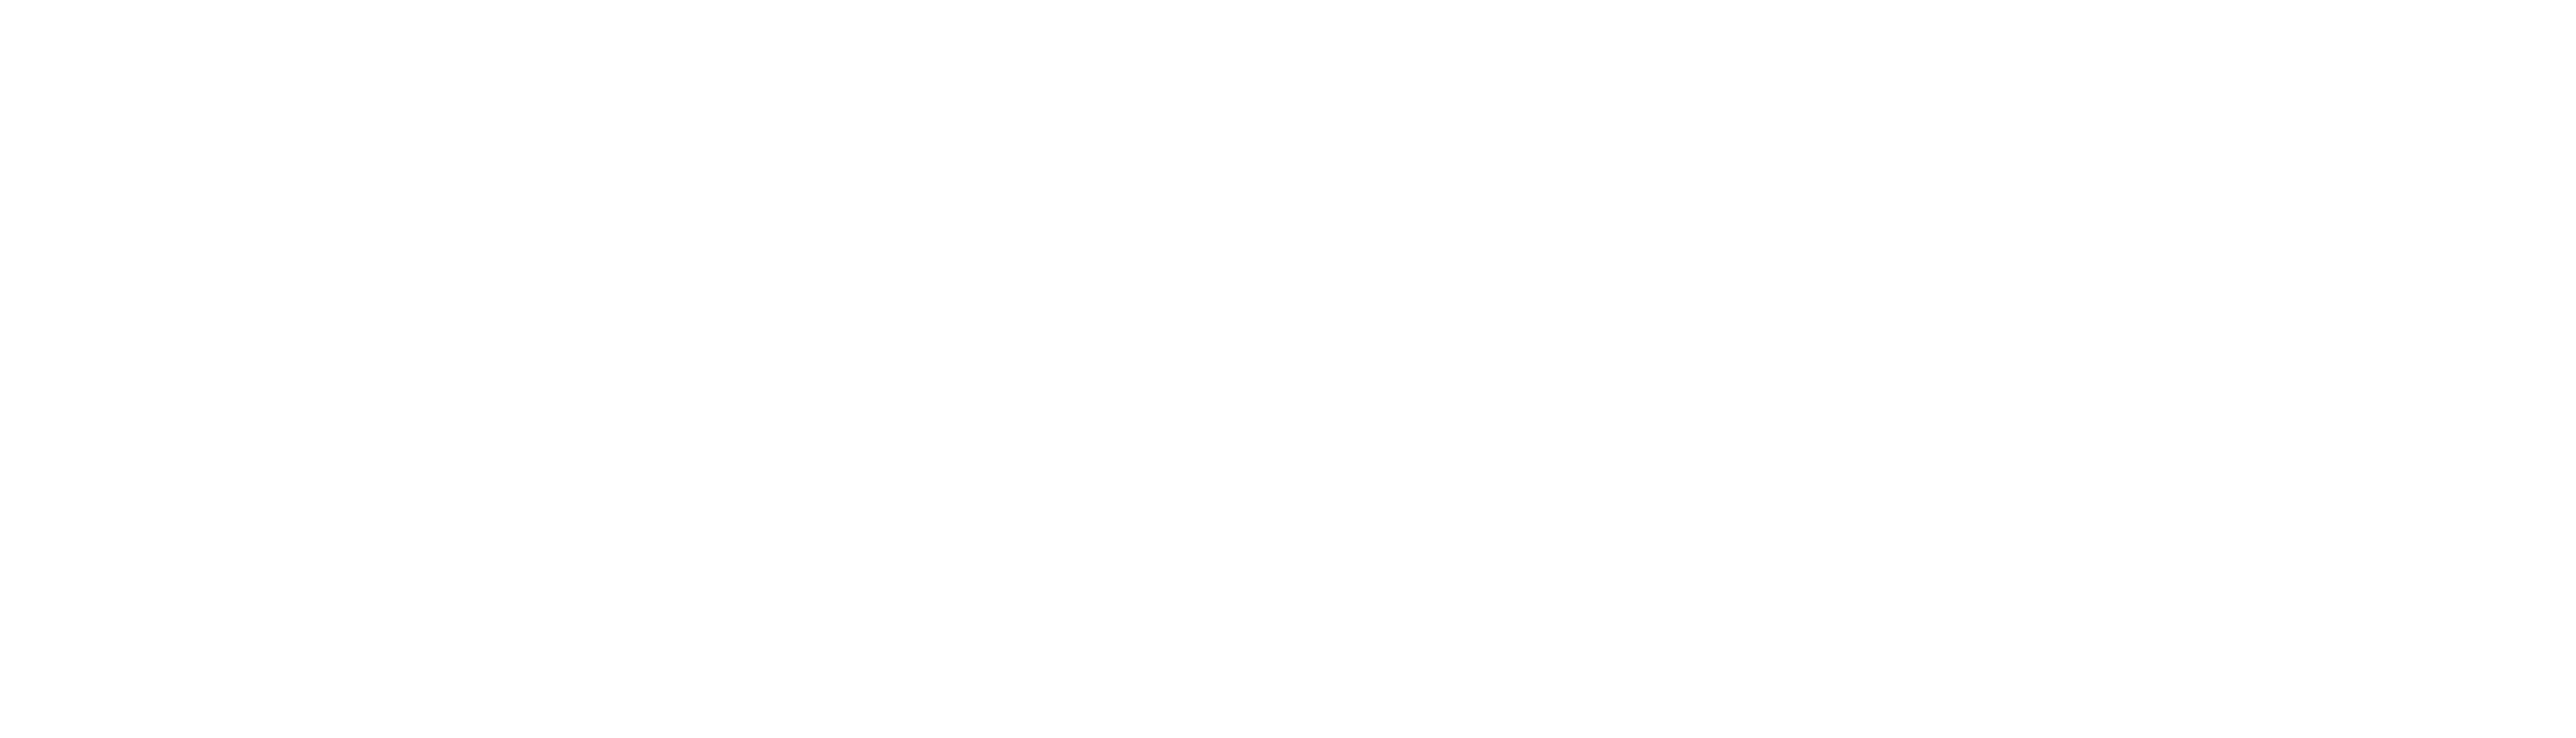 White tibco logo